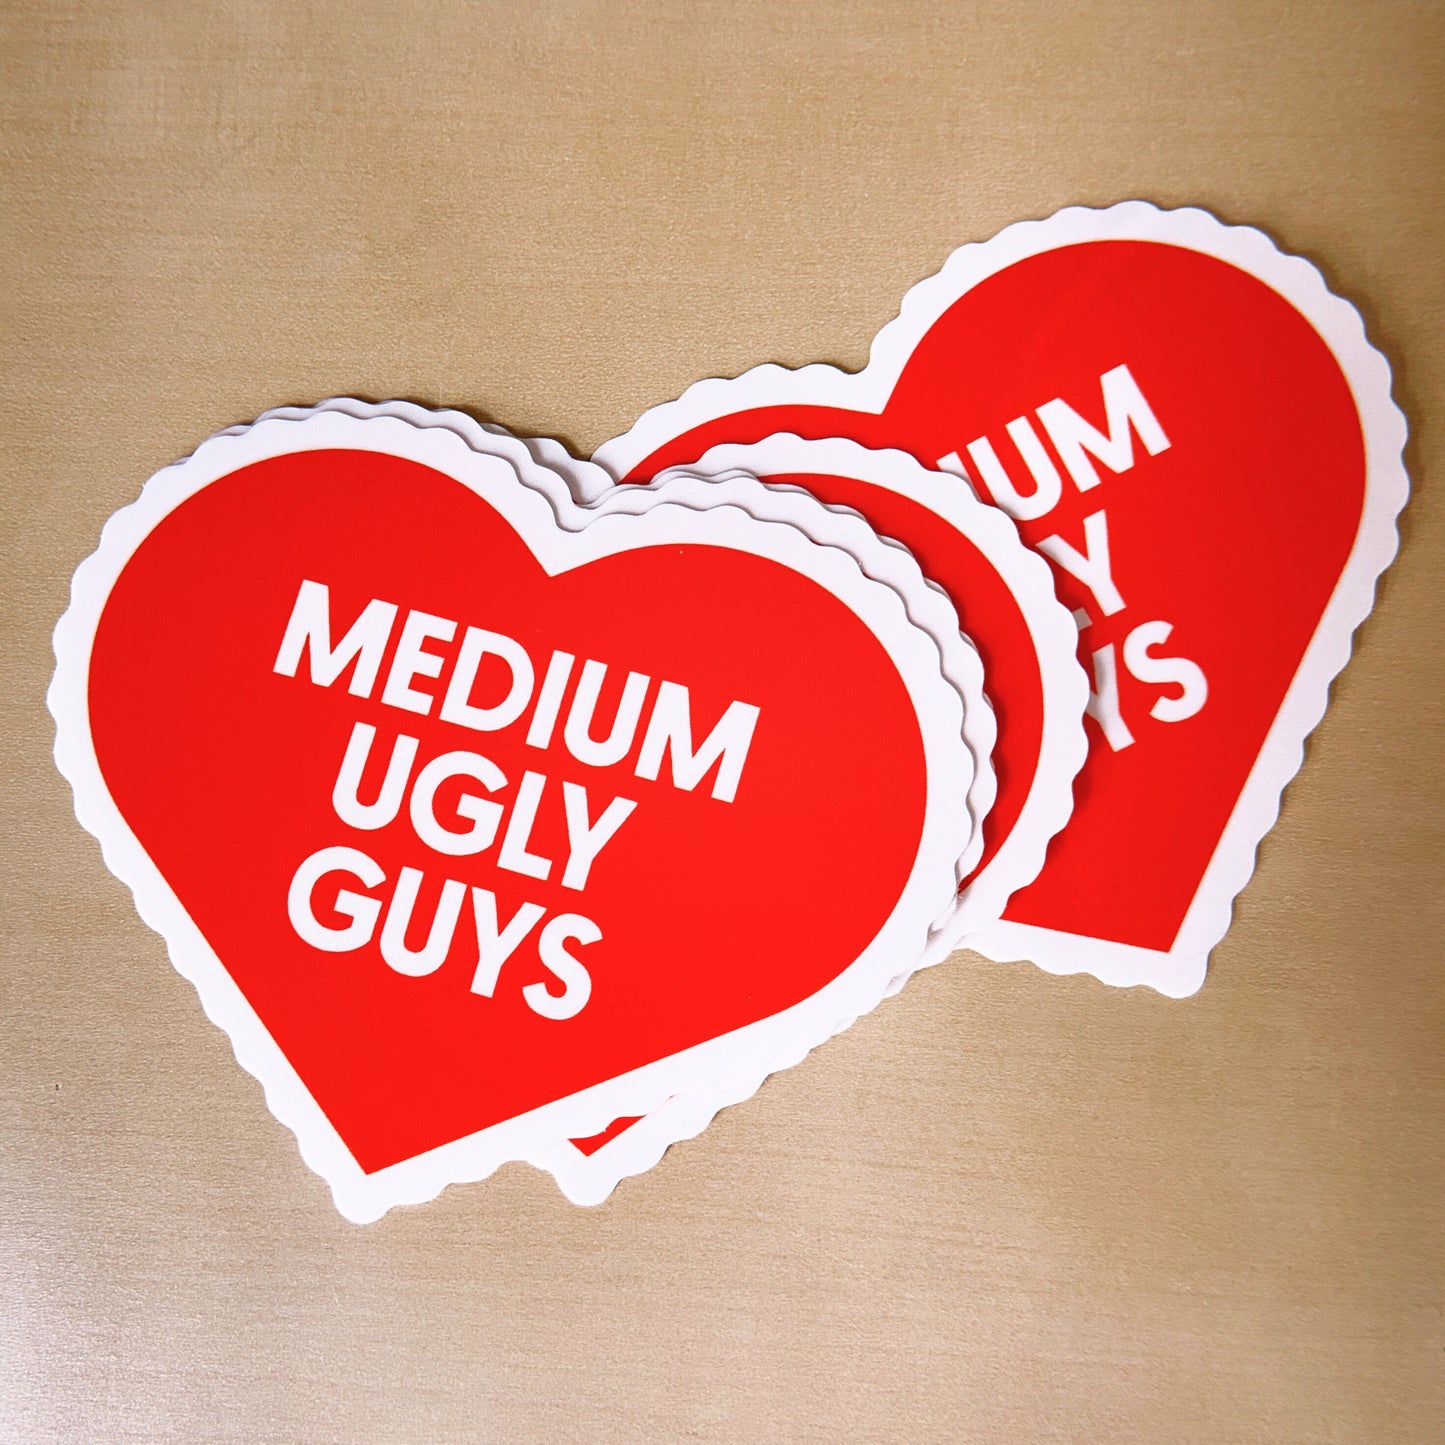 Medium Ugly Guys Sticker